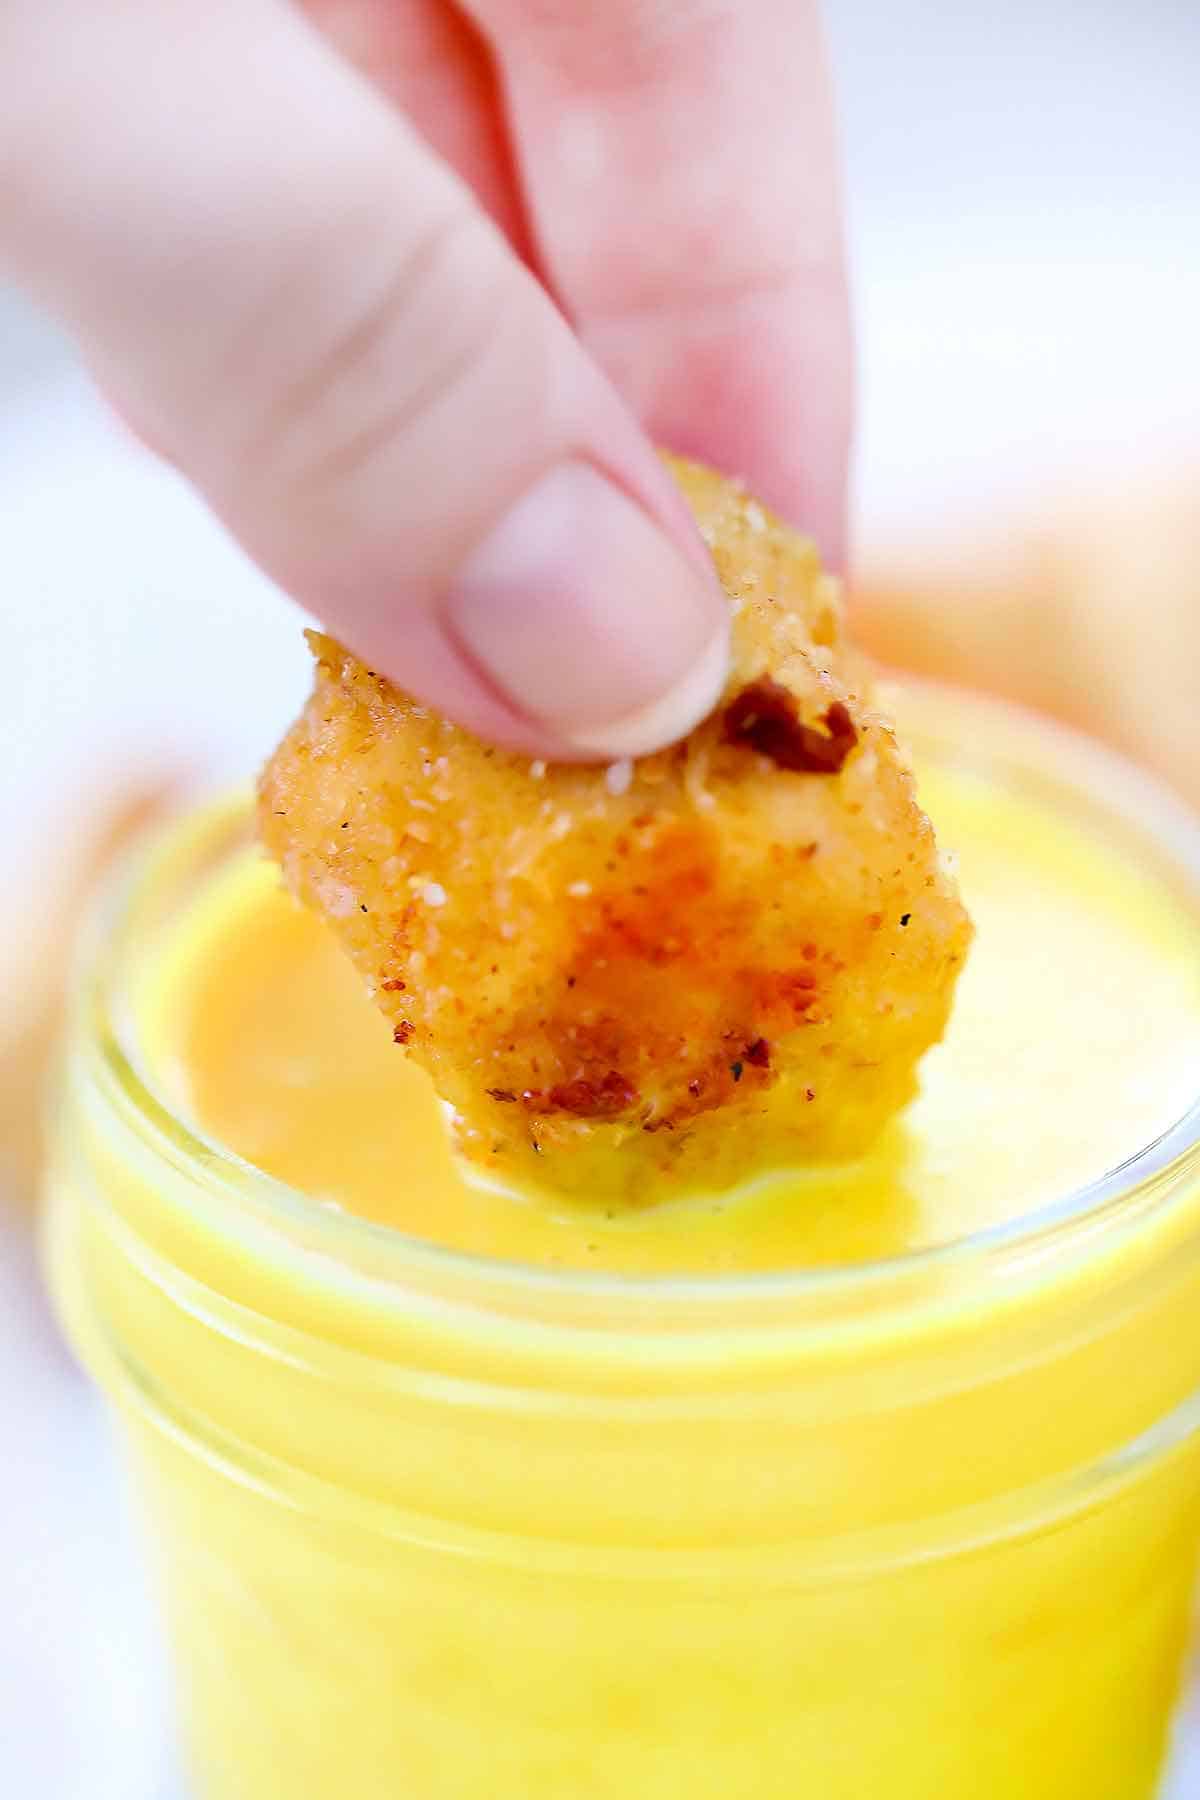 Dipping a chicken nugget into homemade honey mustard sauce.